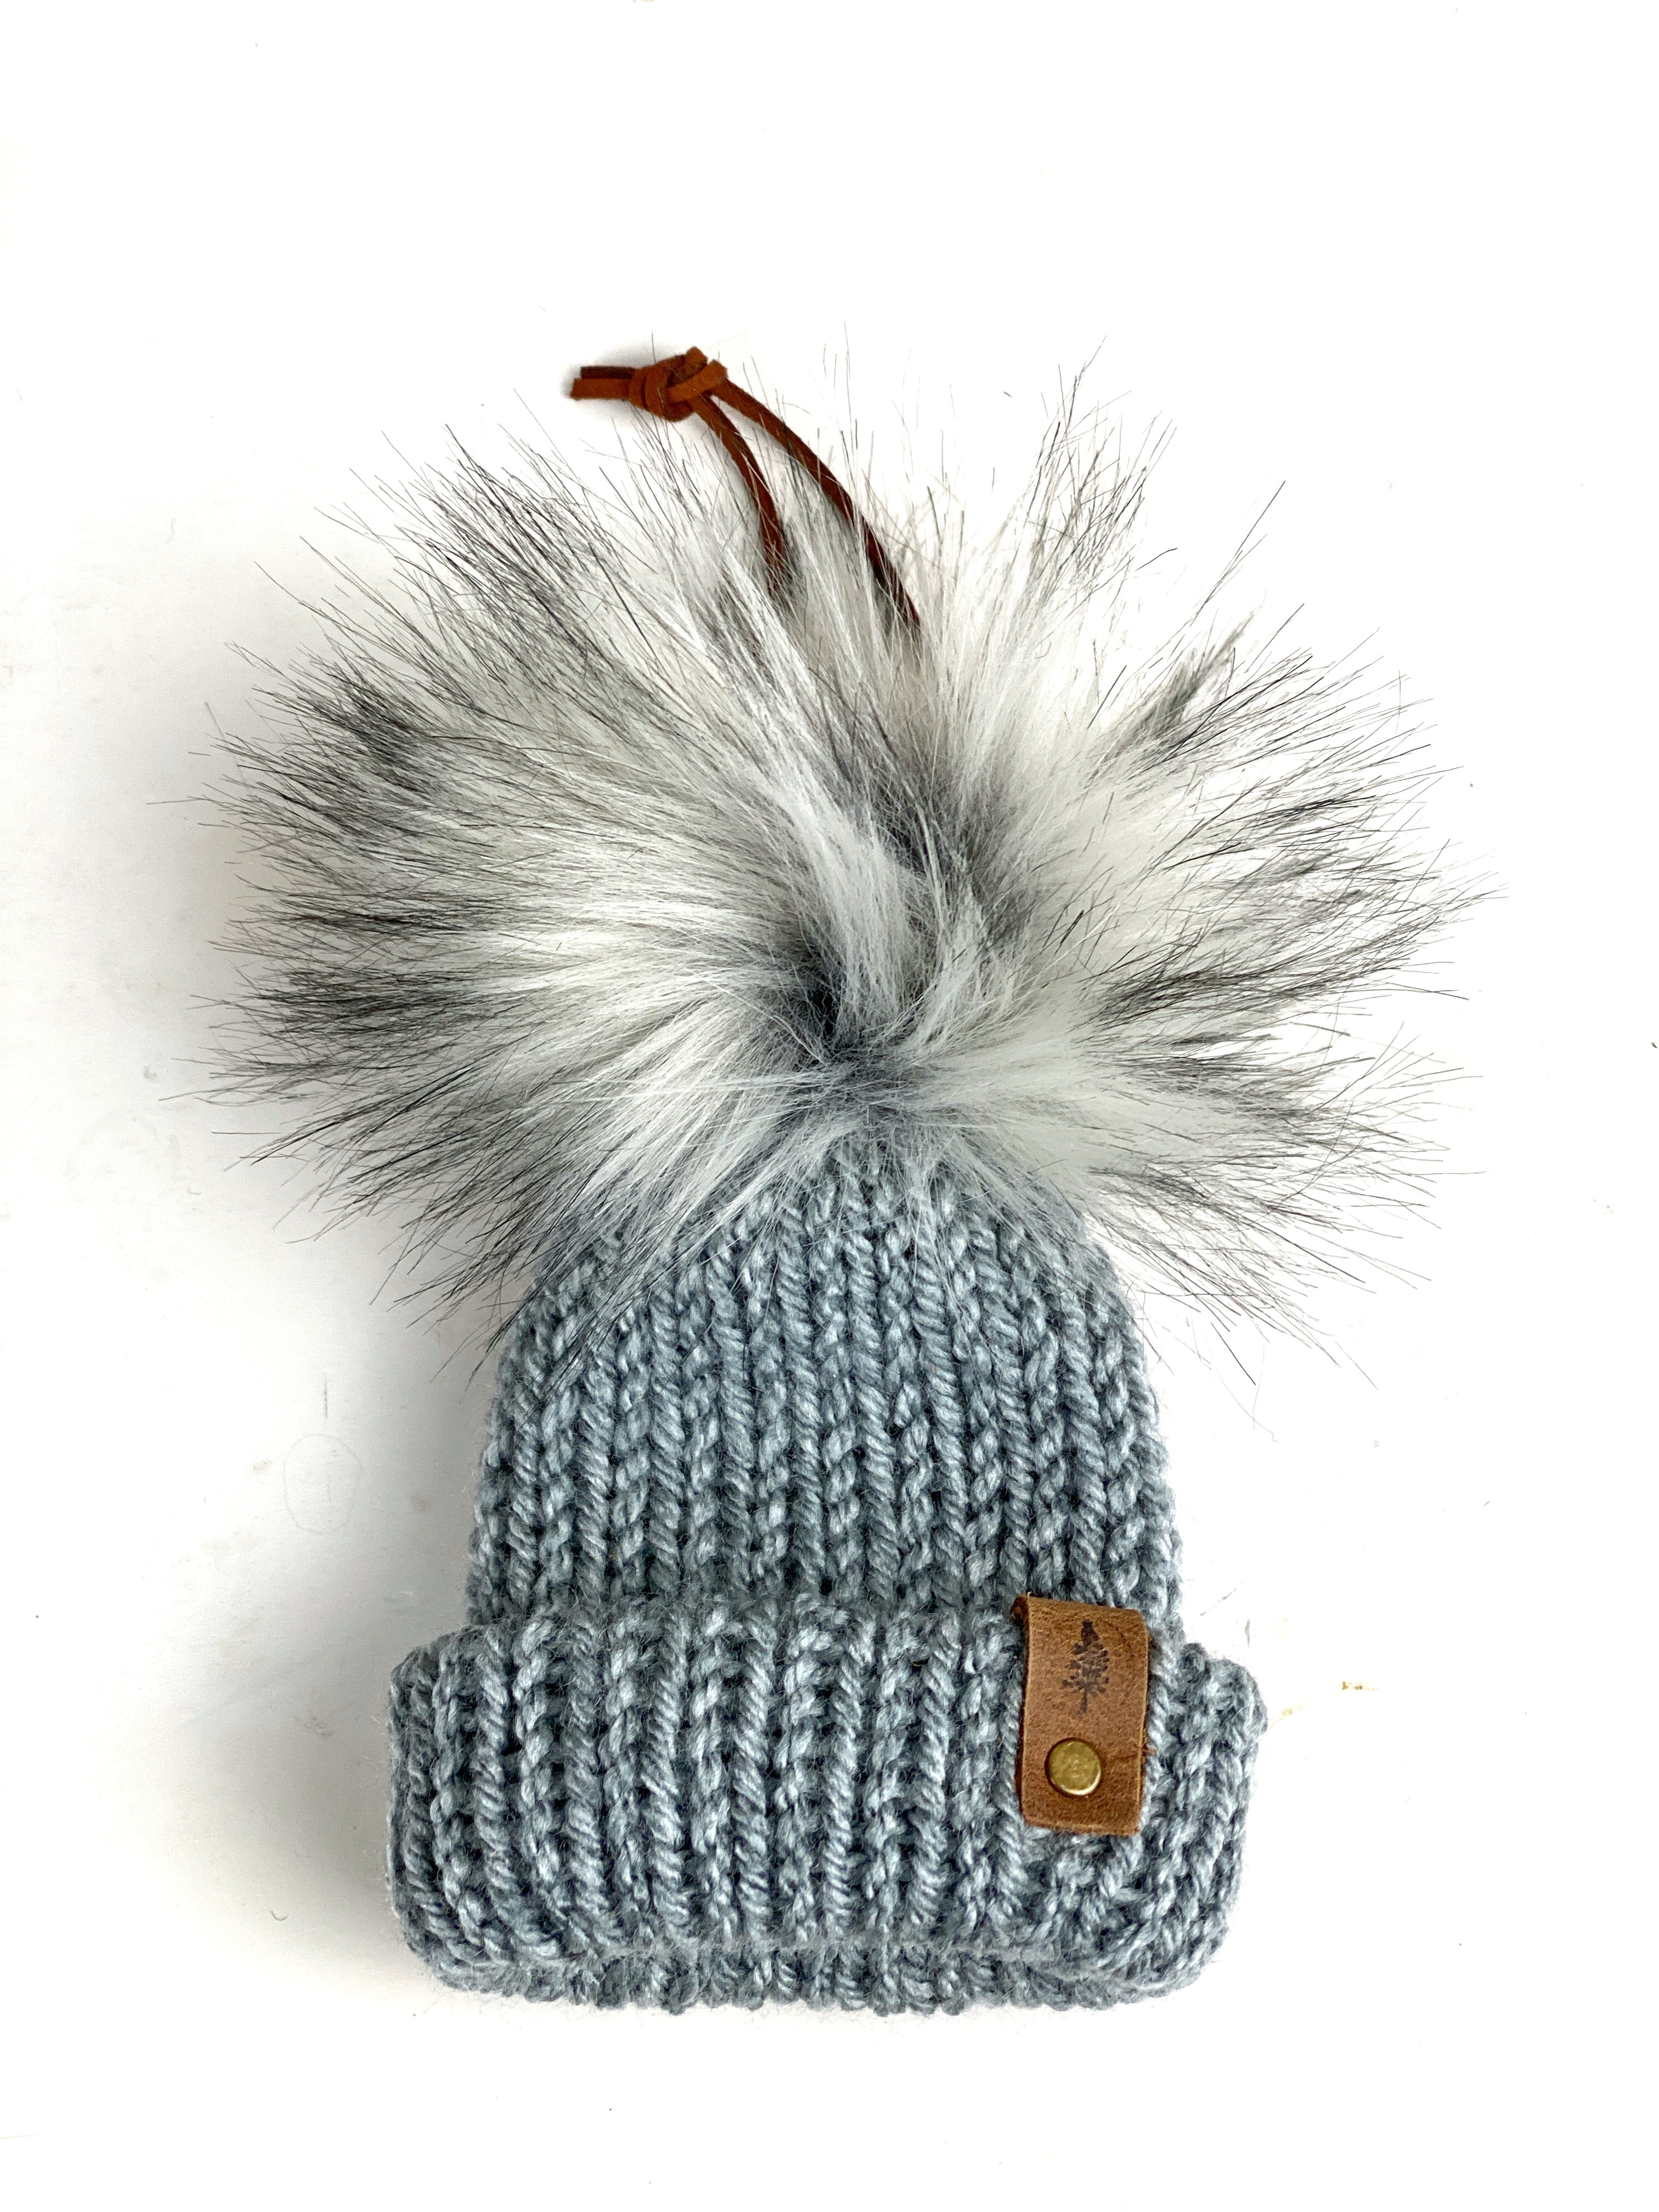 Eddie Bauer Cozy Camp Recycled Acrylic Mint Hat Scarf Set, Purse Scarf, Purse Charm, Tiny Knit Hat Ornament